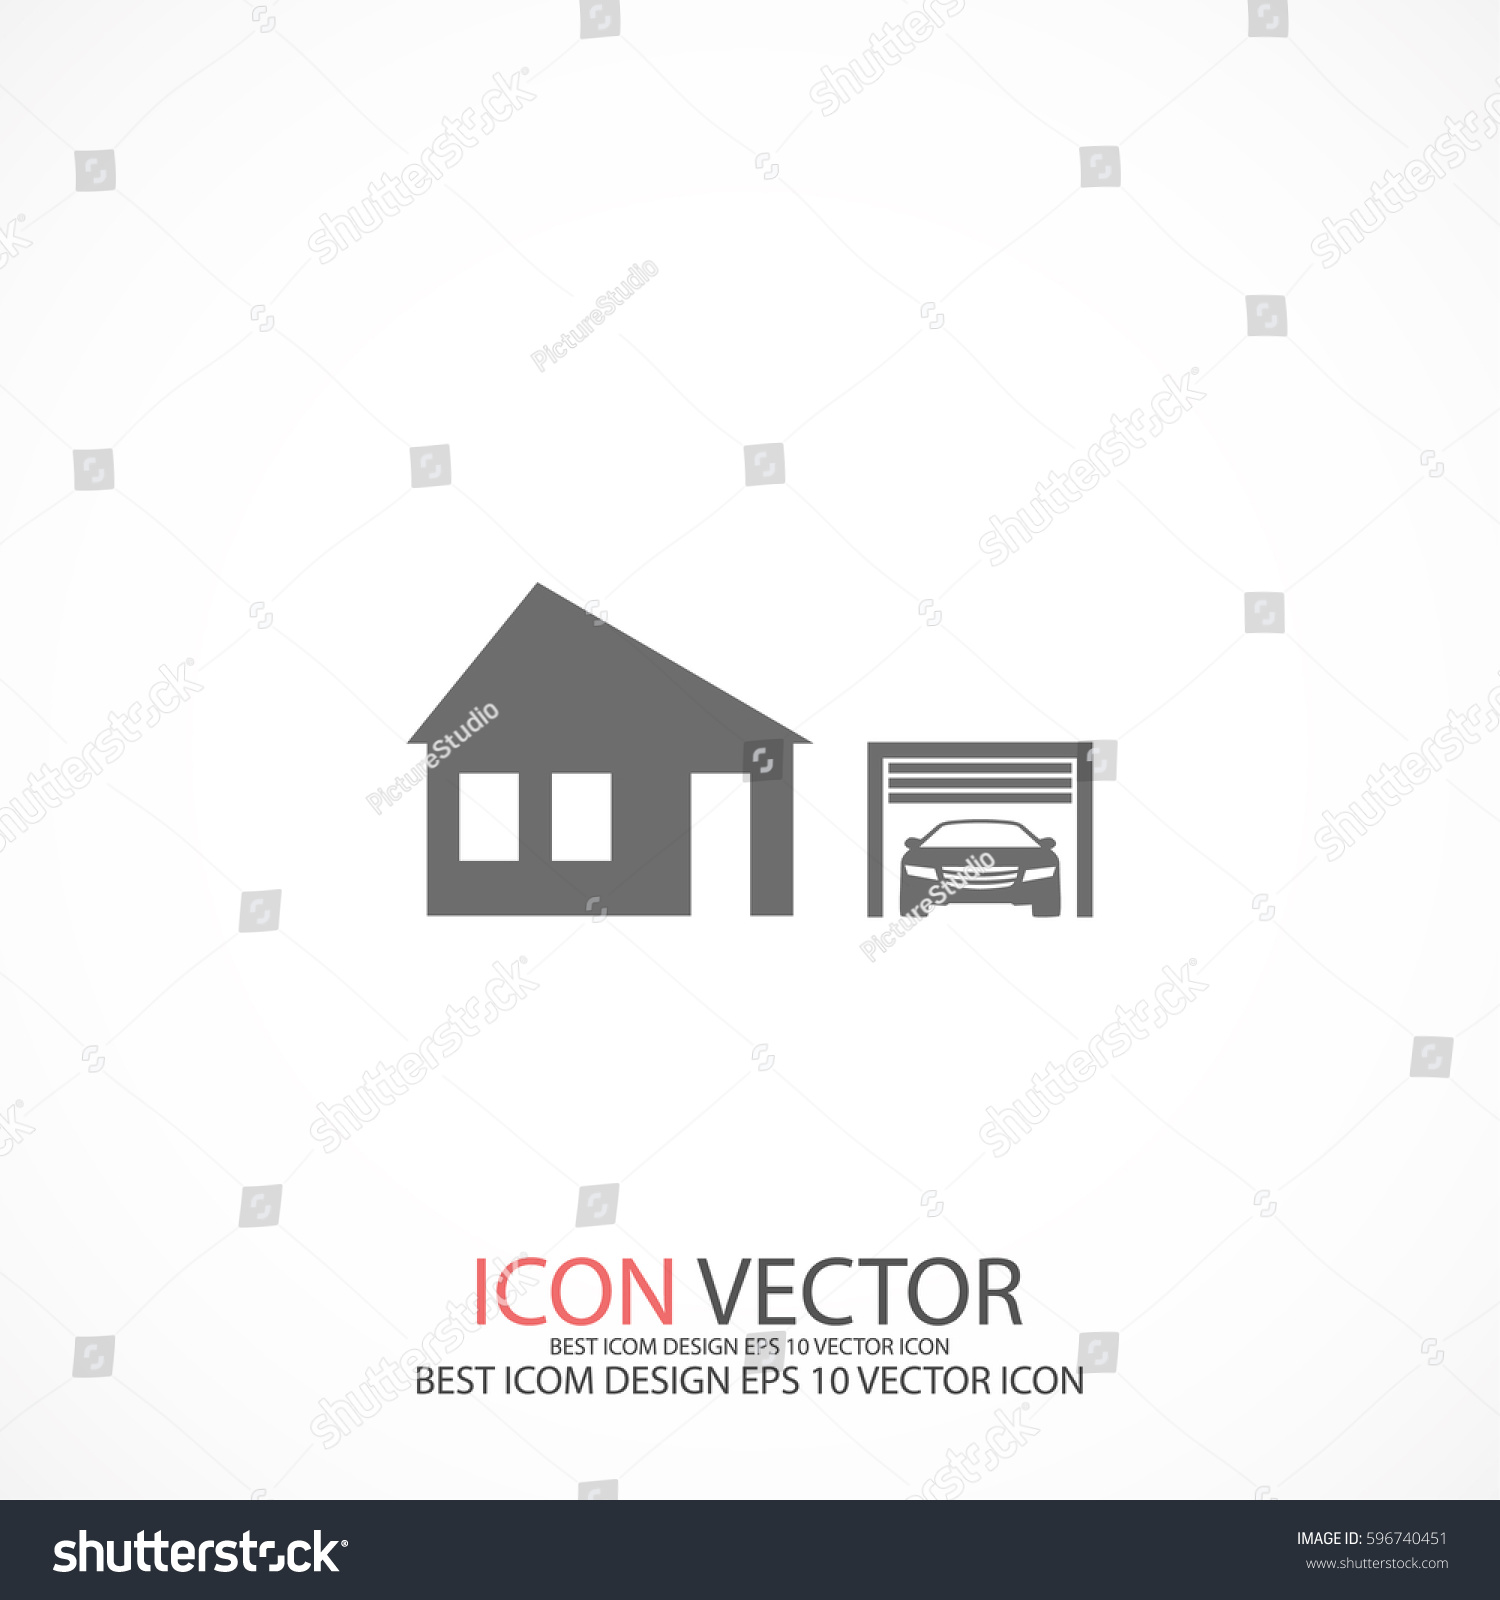 Download Edit Vectors Free Online - house concept | Shutterstock Editor